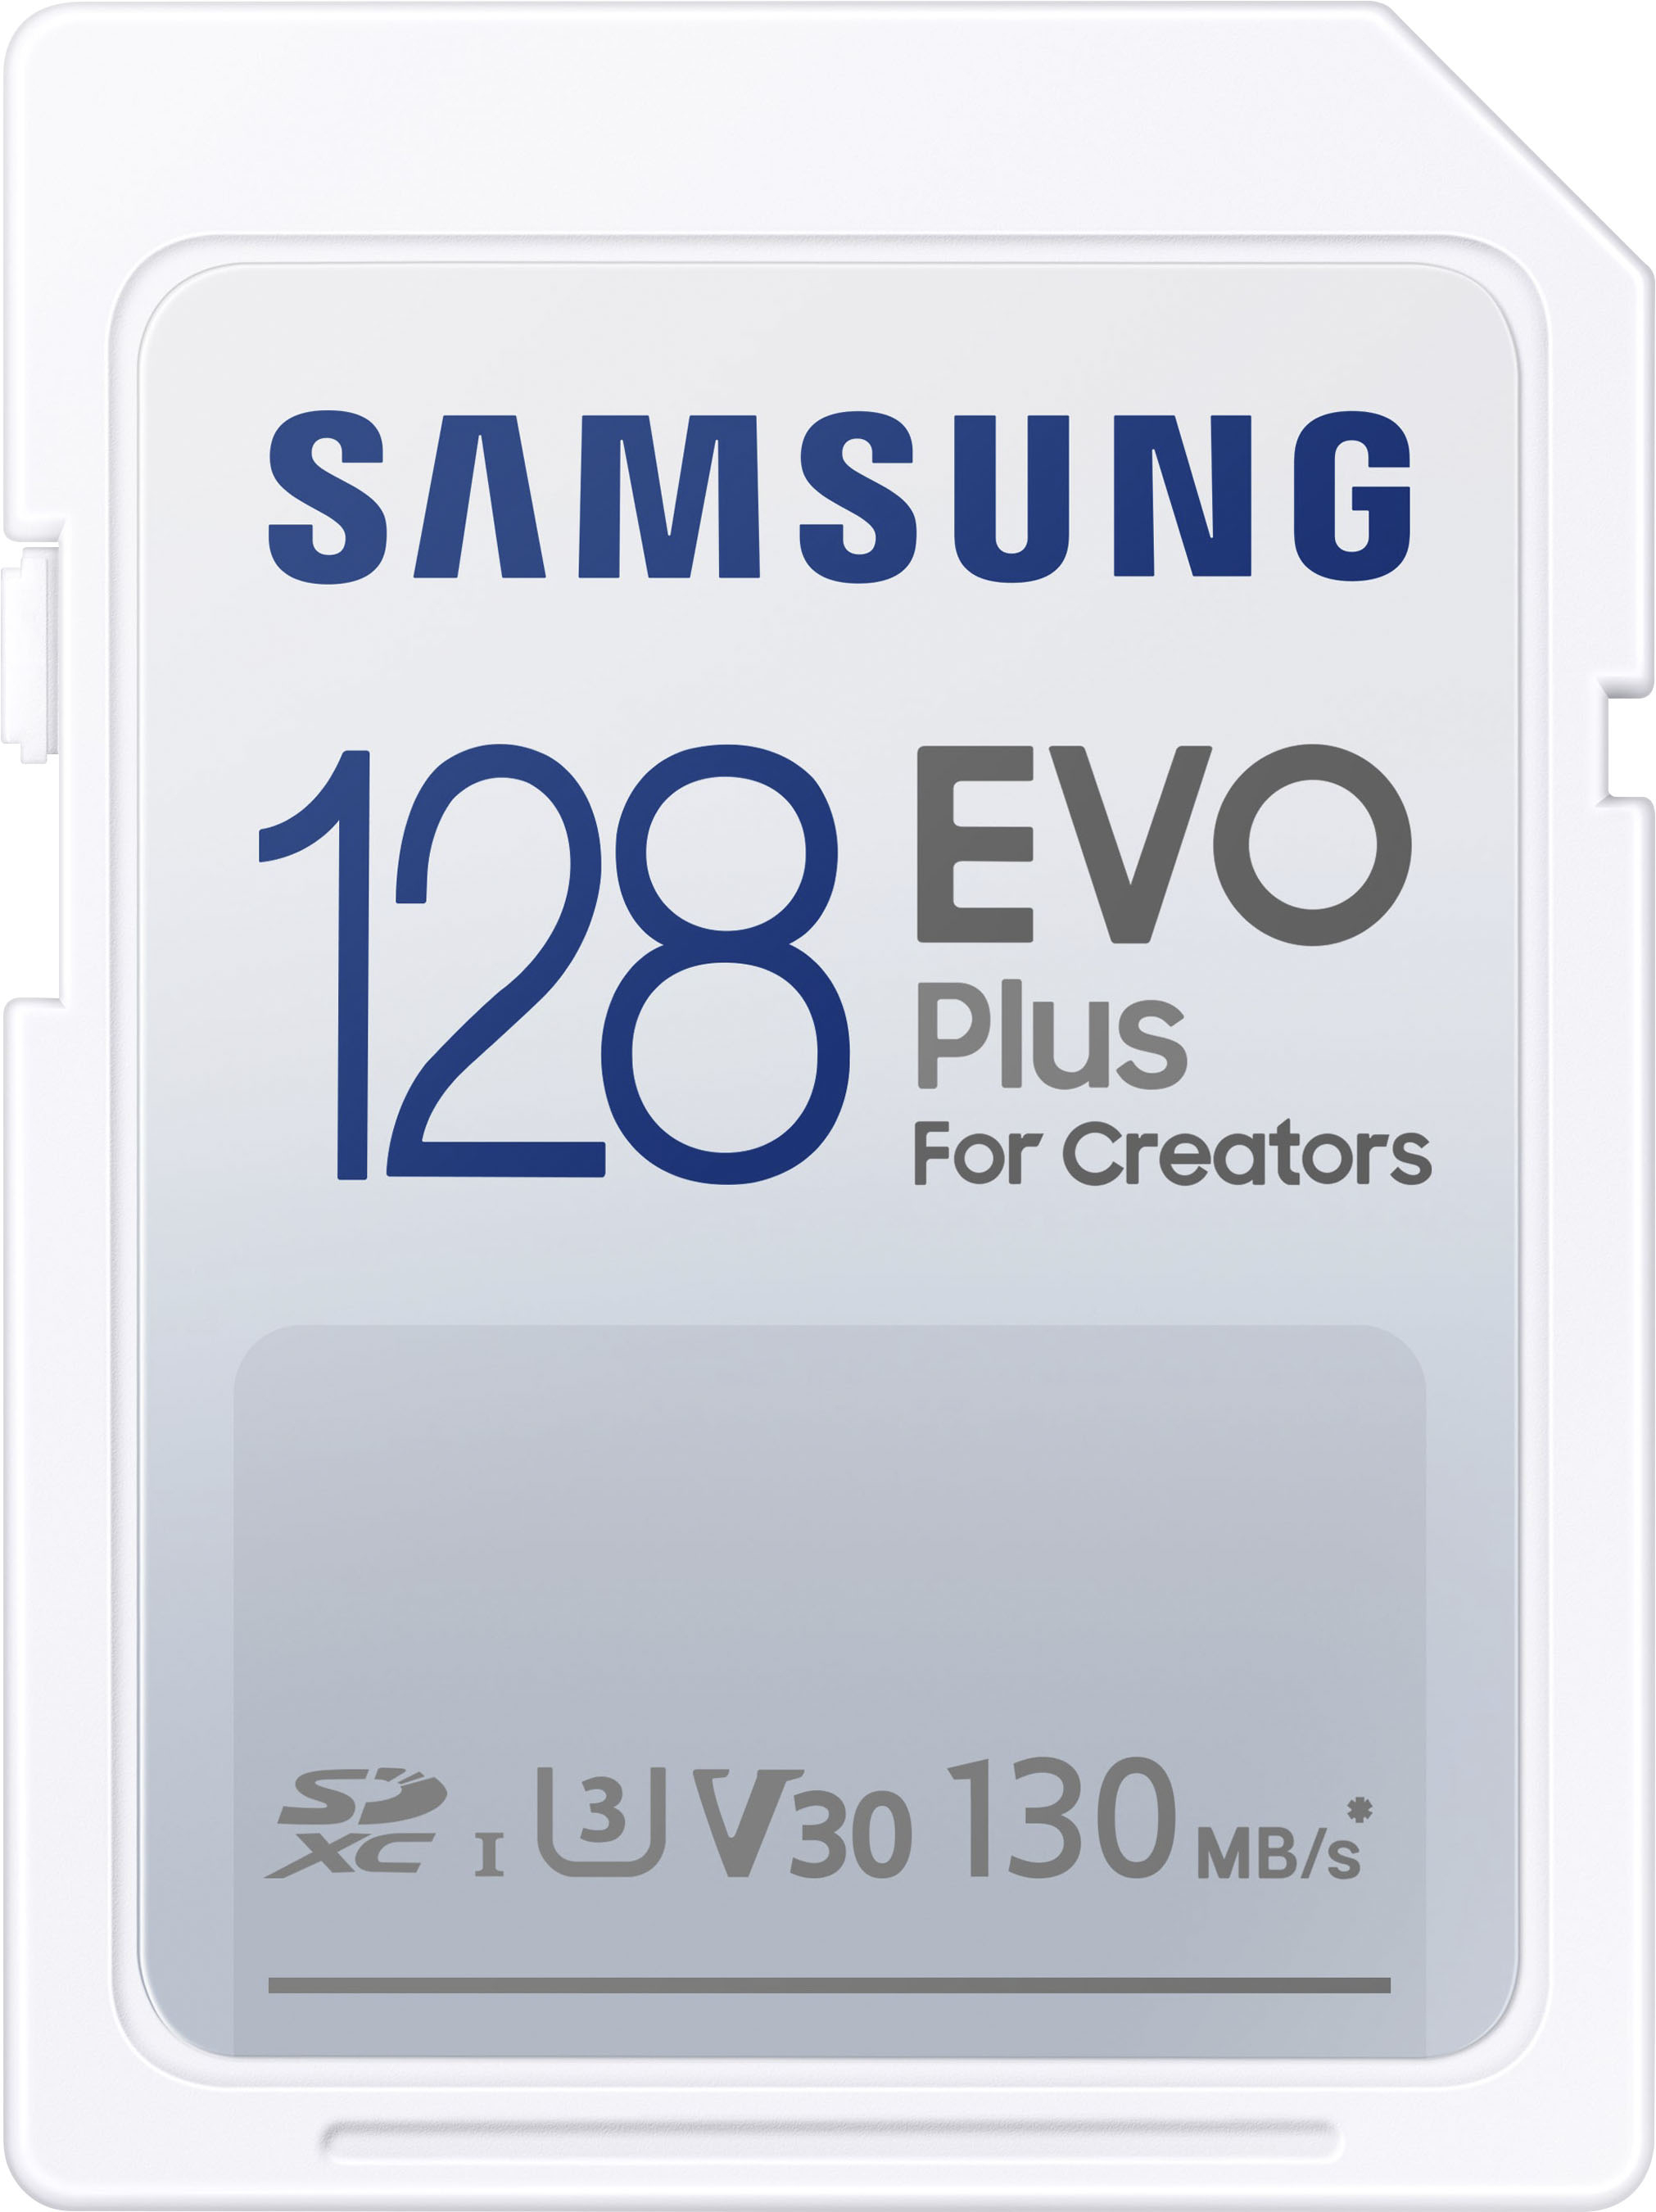 SanDisk 256GB microSDXC UHS-I Memory Card for Nintendo Switch  SDSQXAO-256G-ANCZN - Best Buy